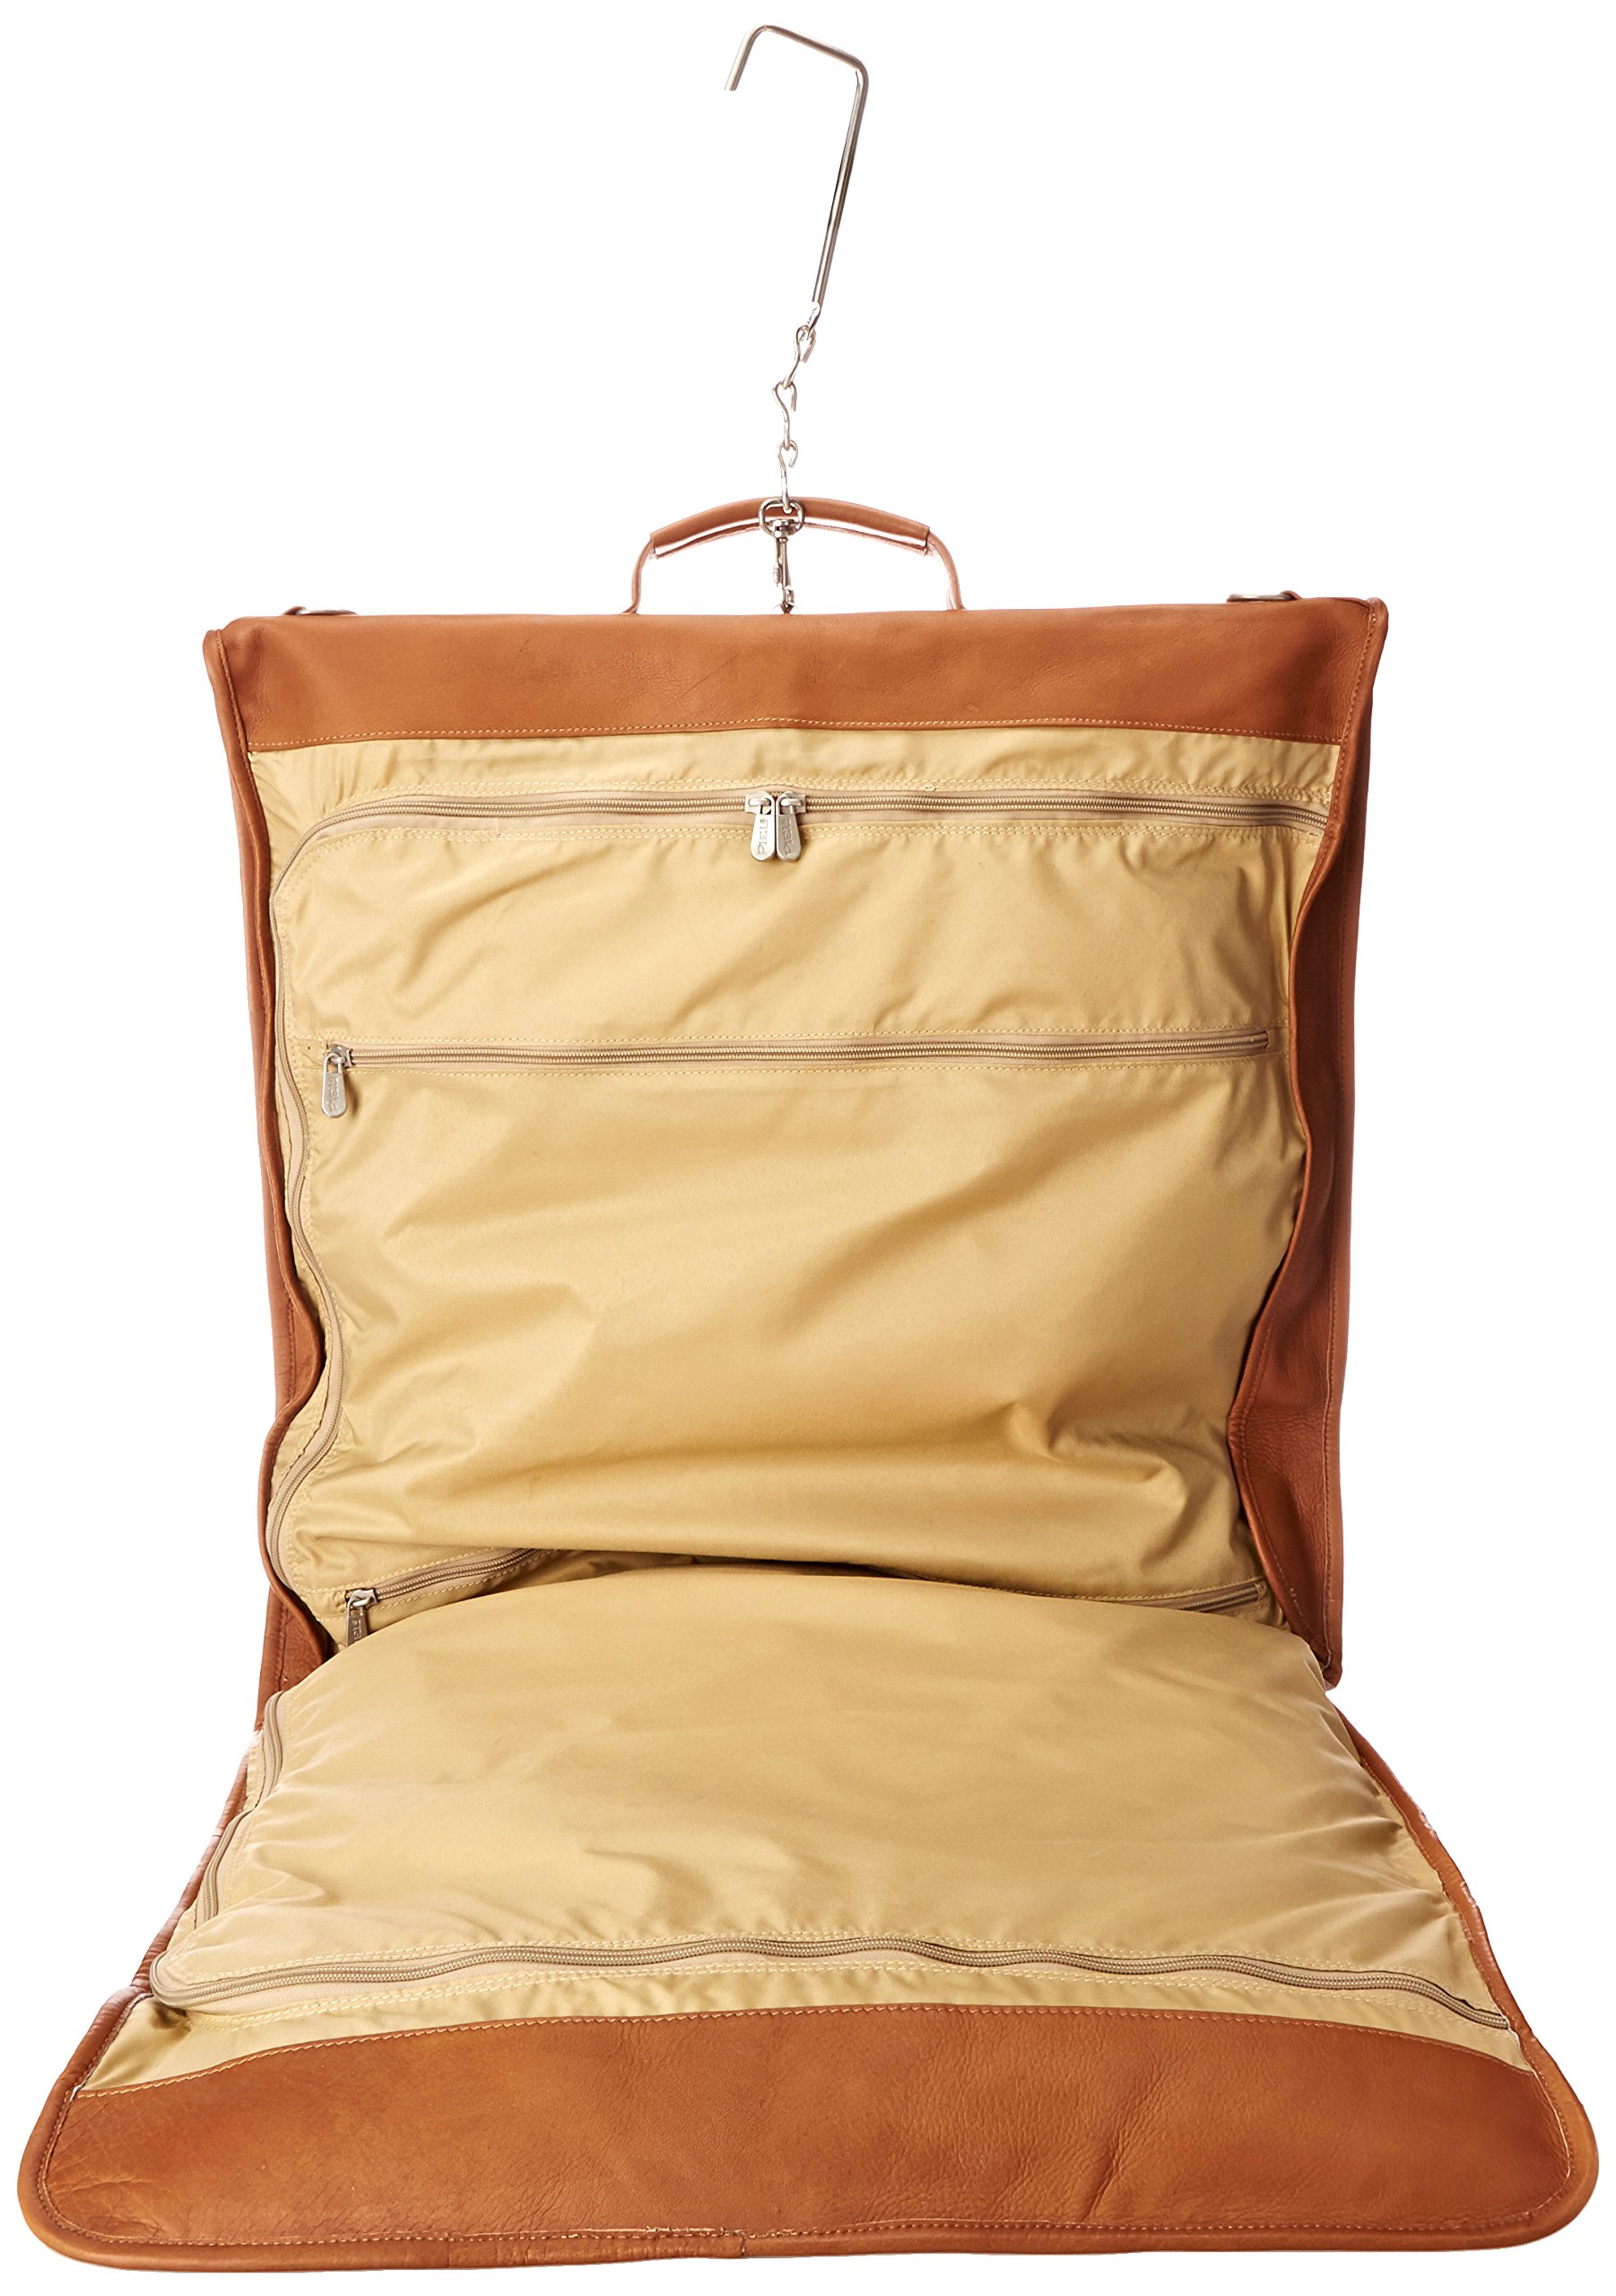 Piel Leather Tri-fold garment Bag, Saddle, One Size